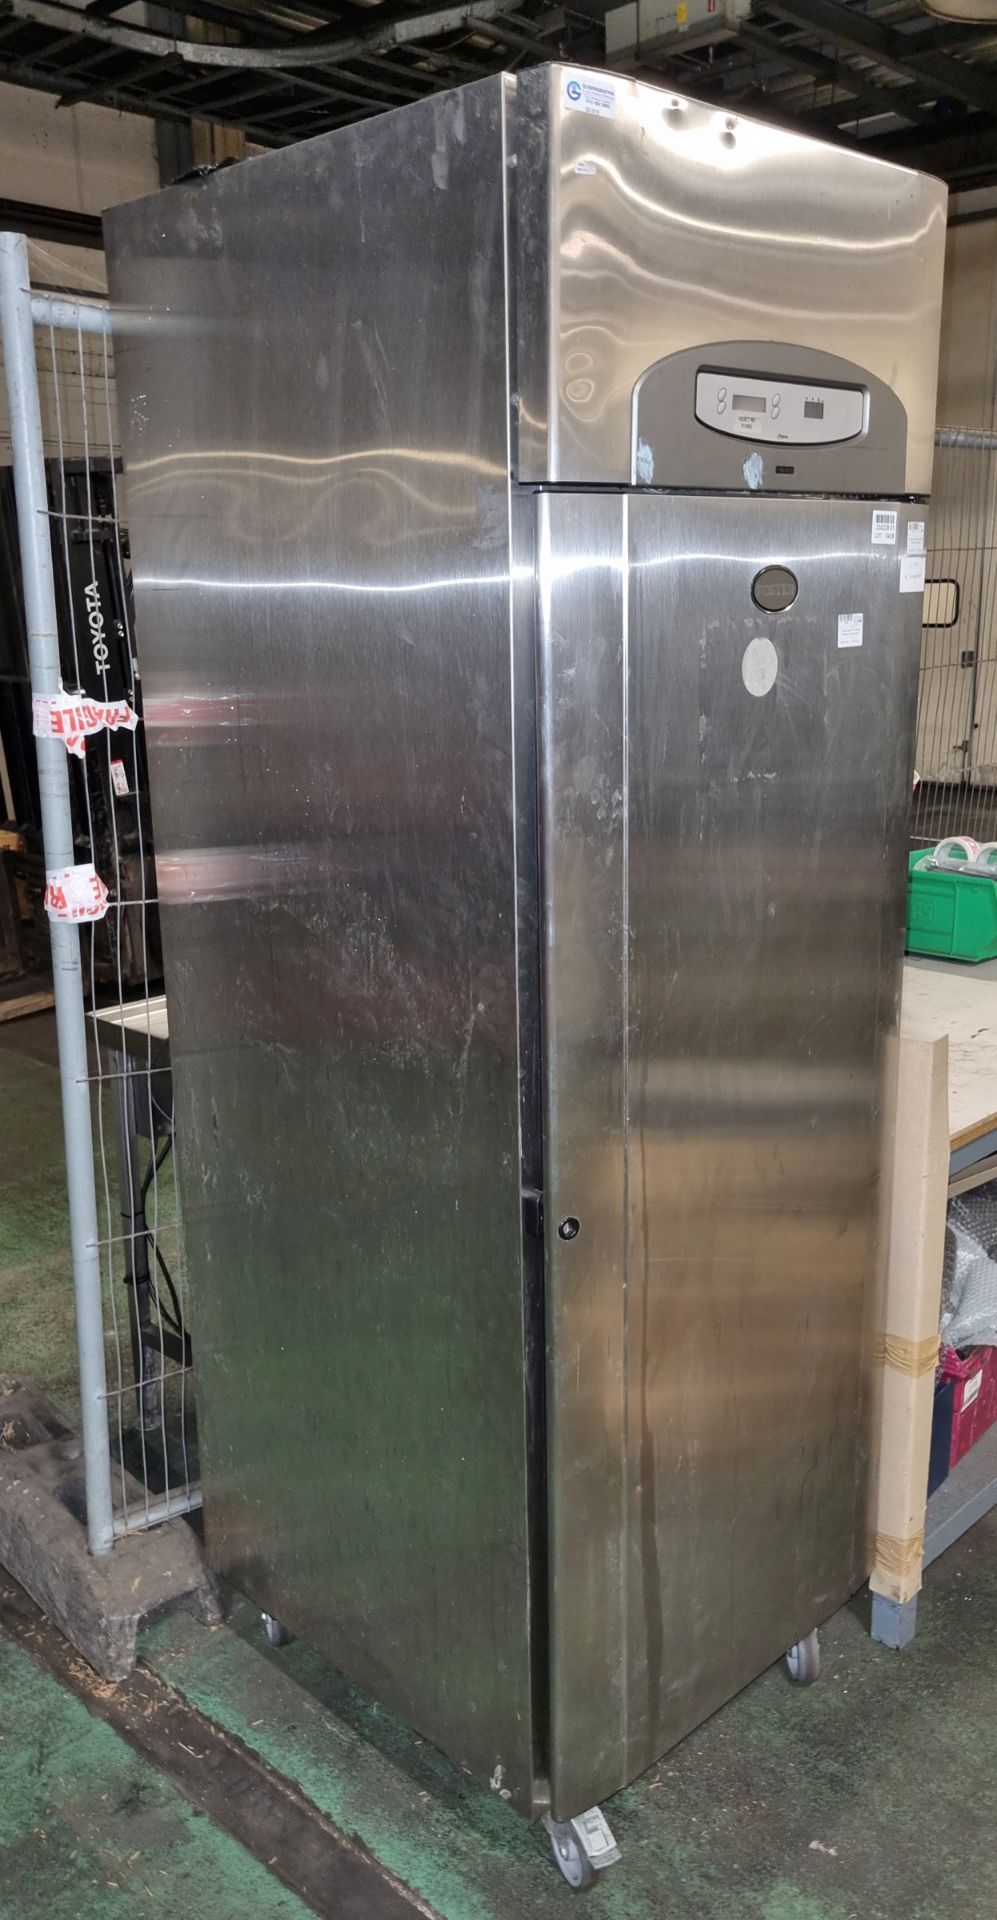 Fridgemaster MTL55249 freestanding tall fridge - Image 2 of 5